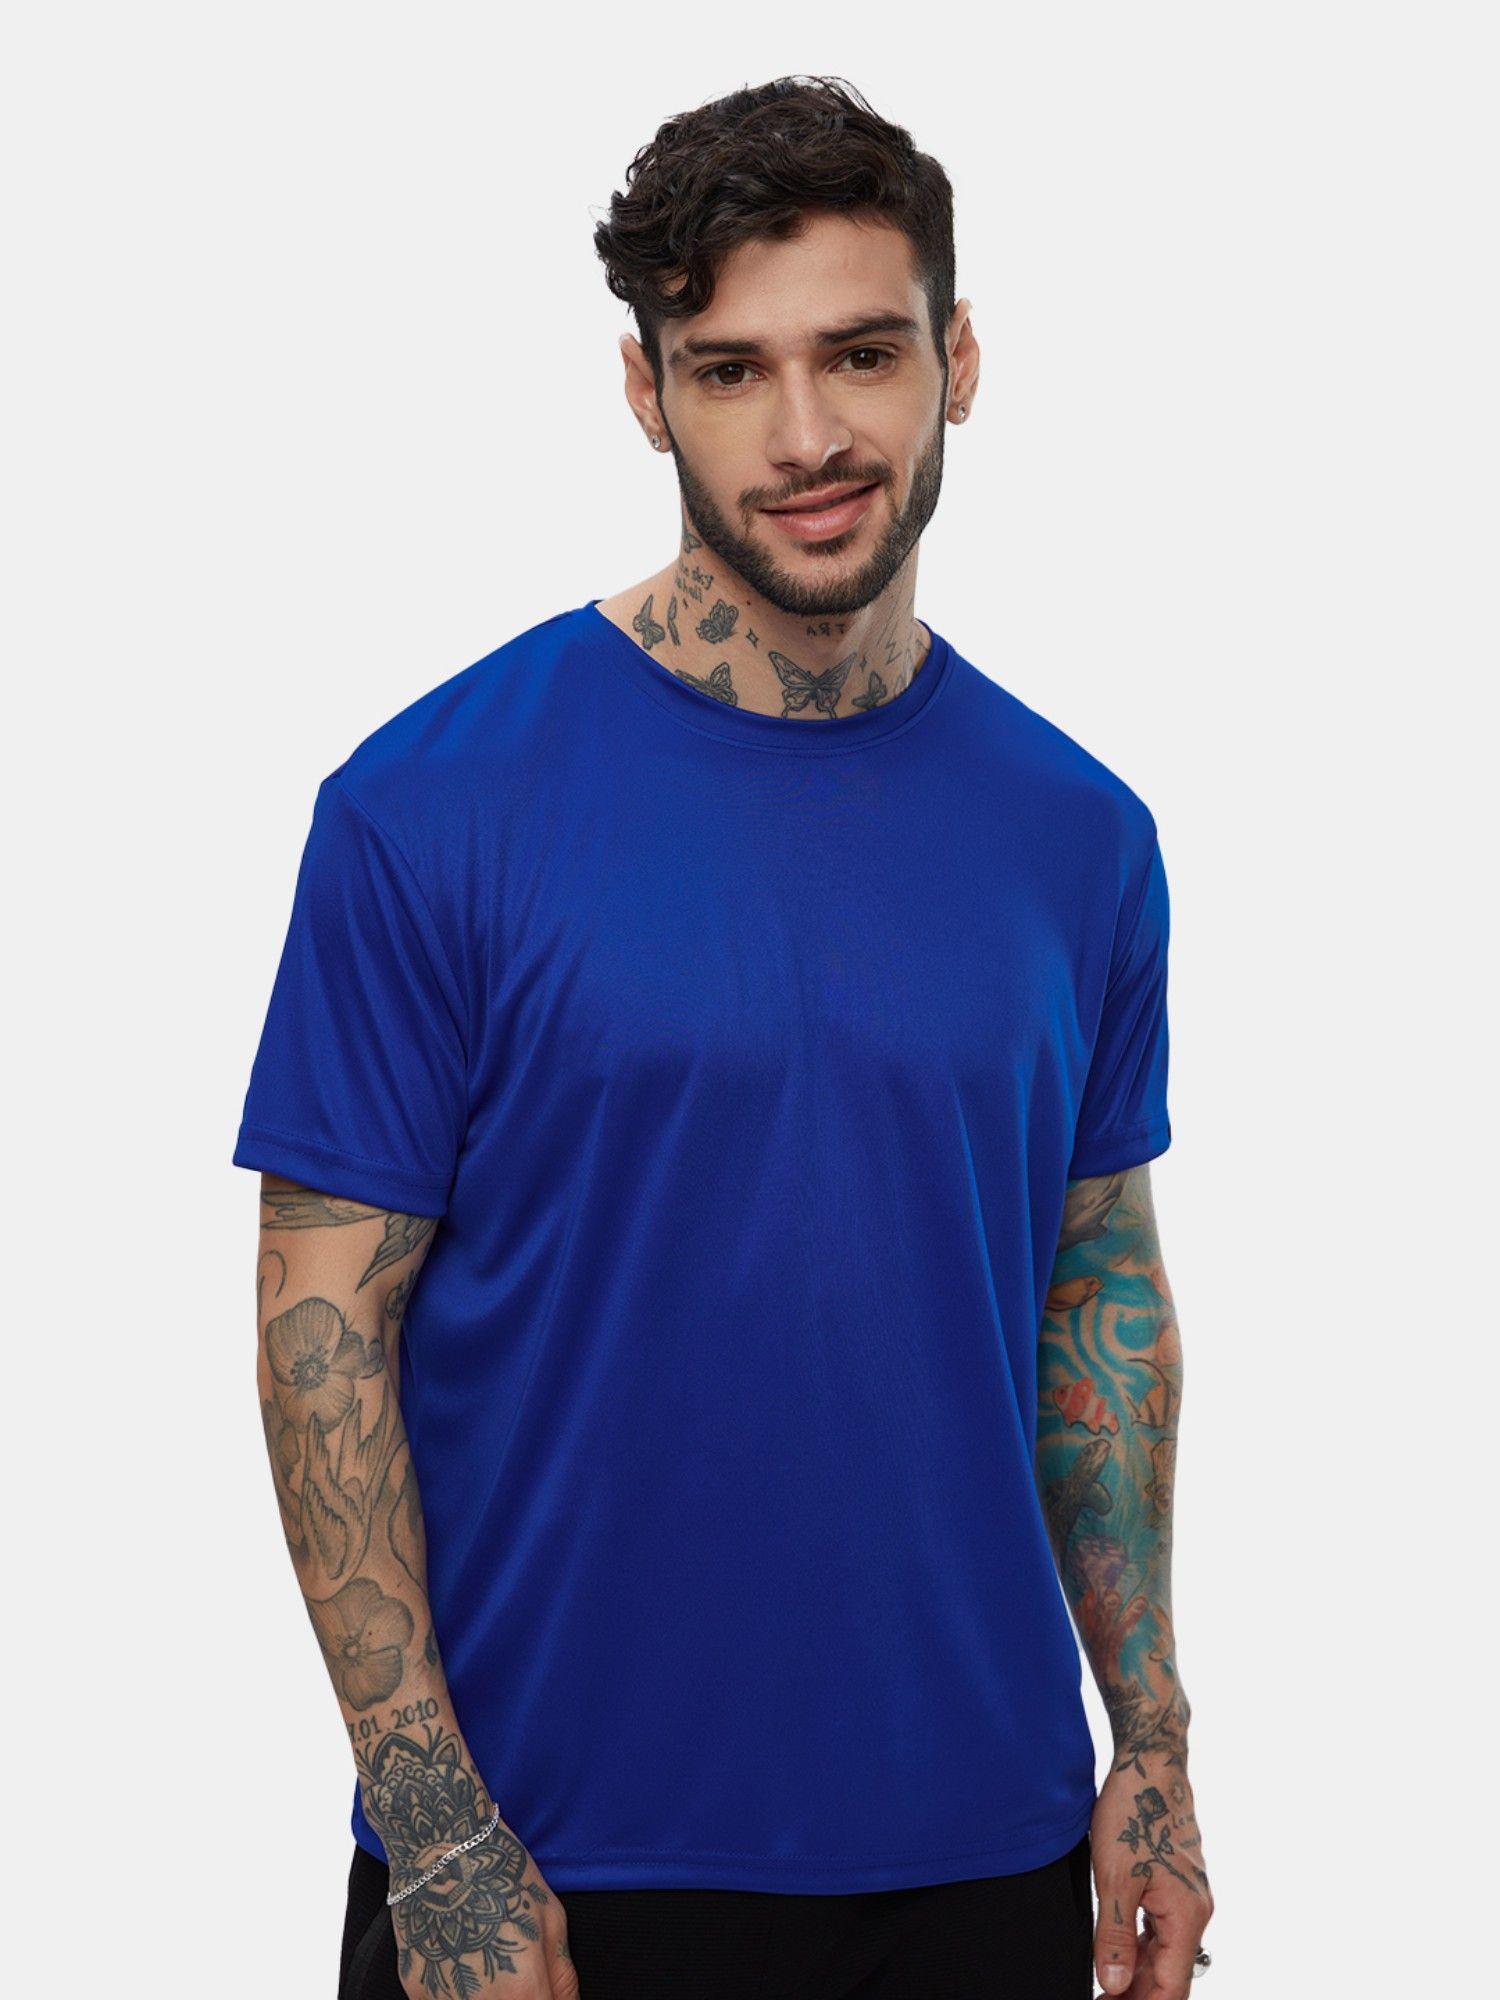 solids blue jerseys for mens